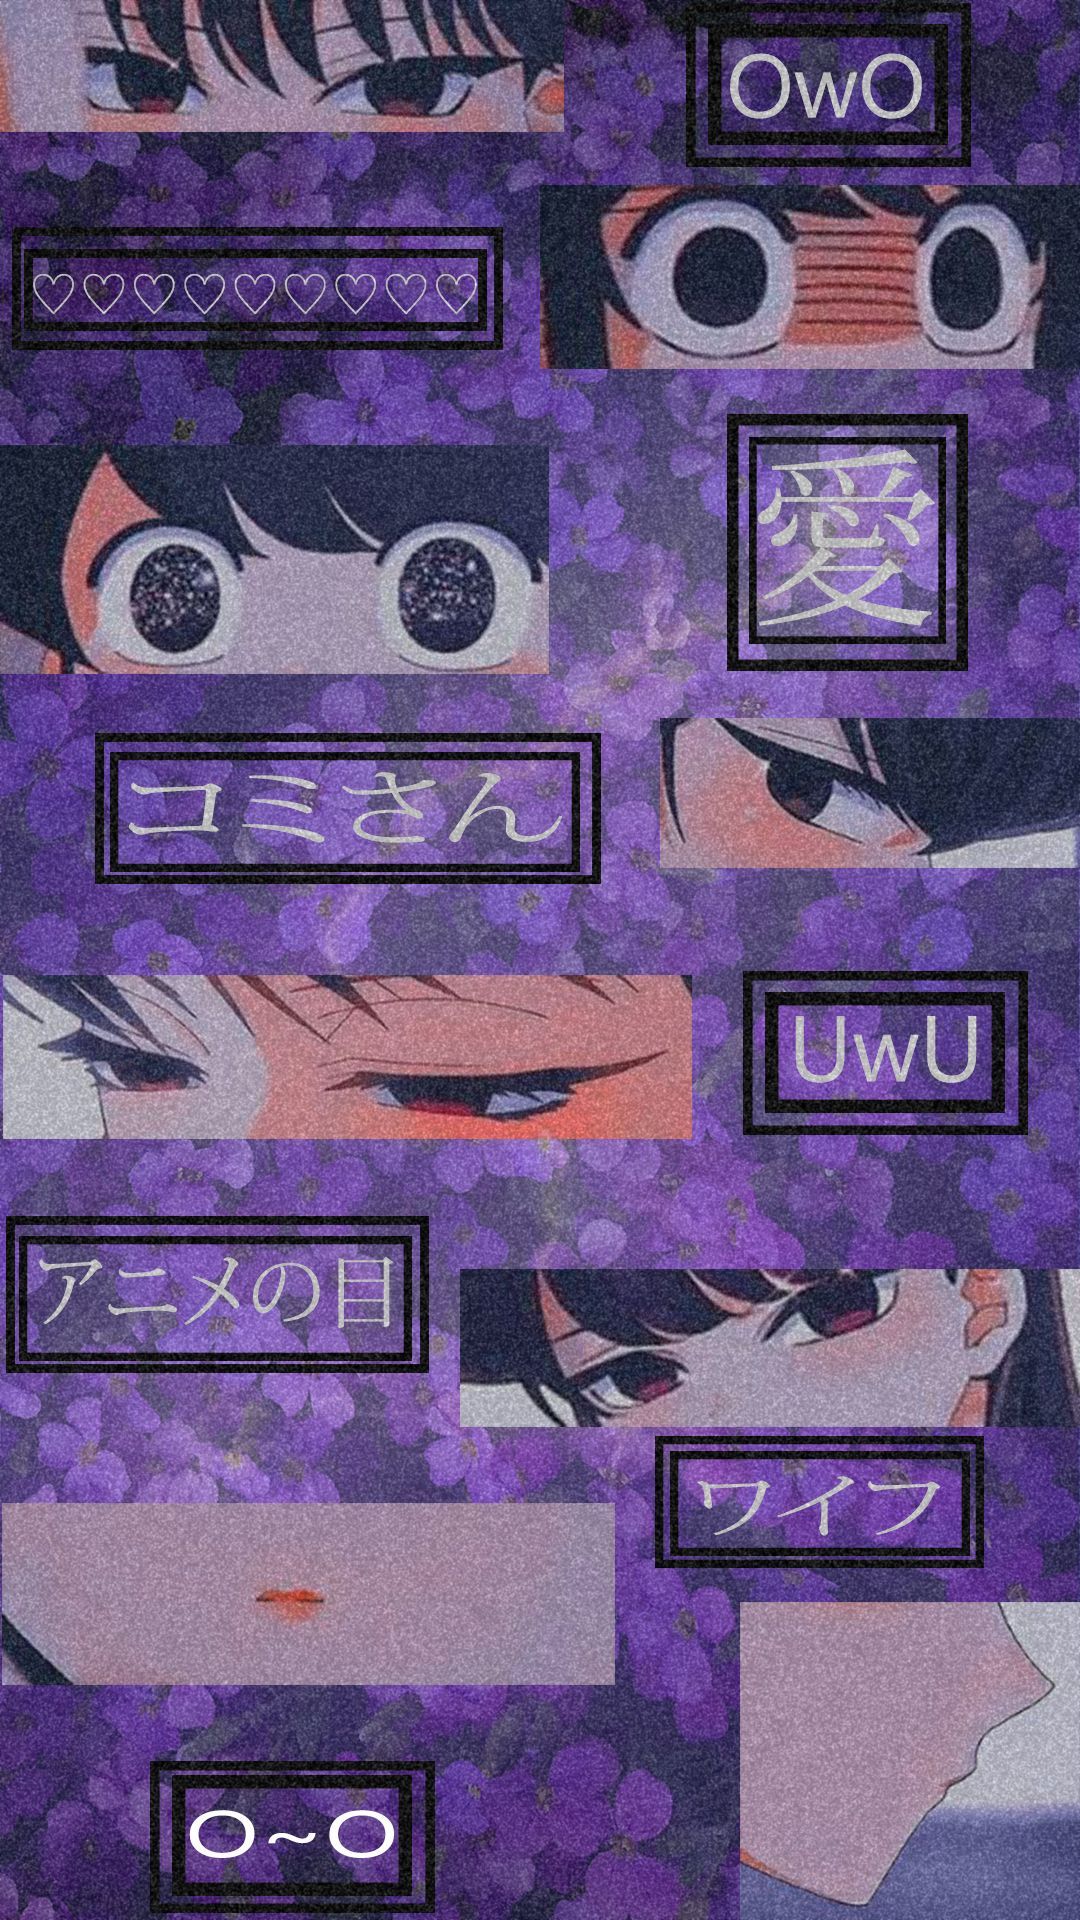 Anime phone wallpaper aesthetic purple uwu owo anime boy girl uwu owo - OwO